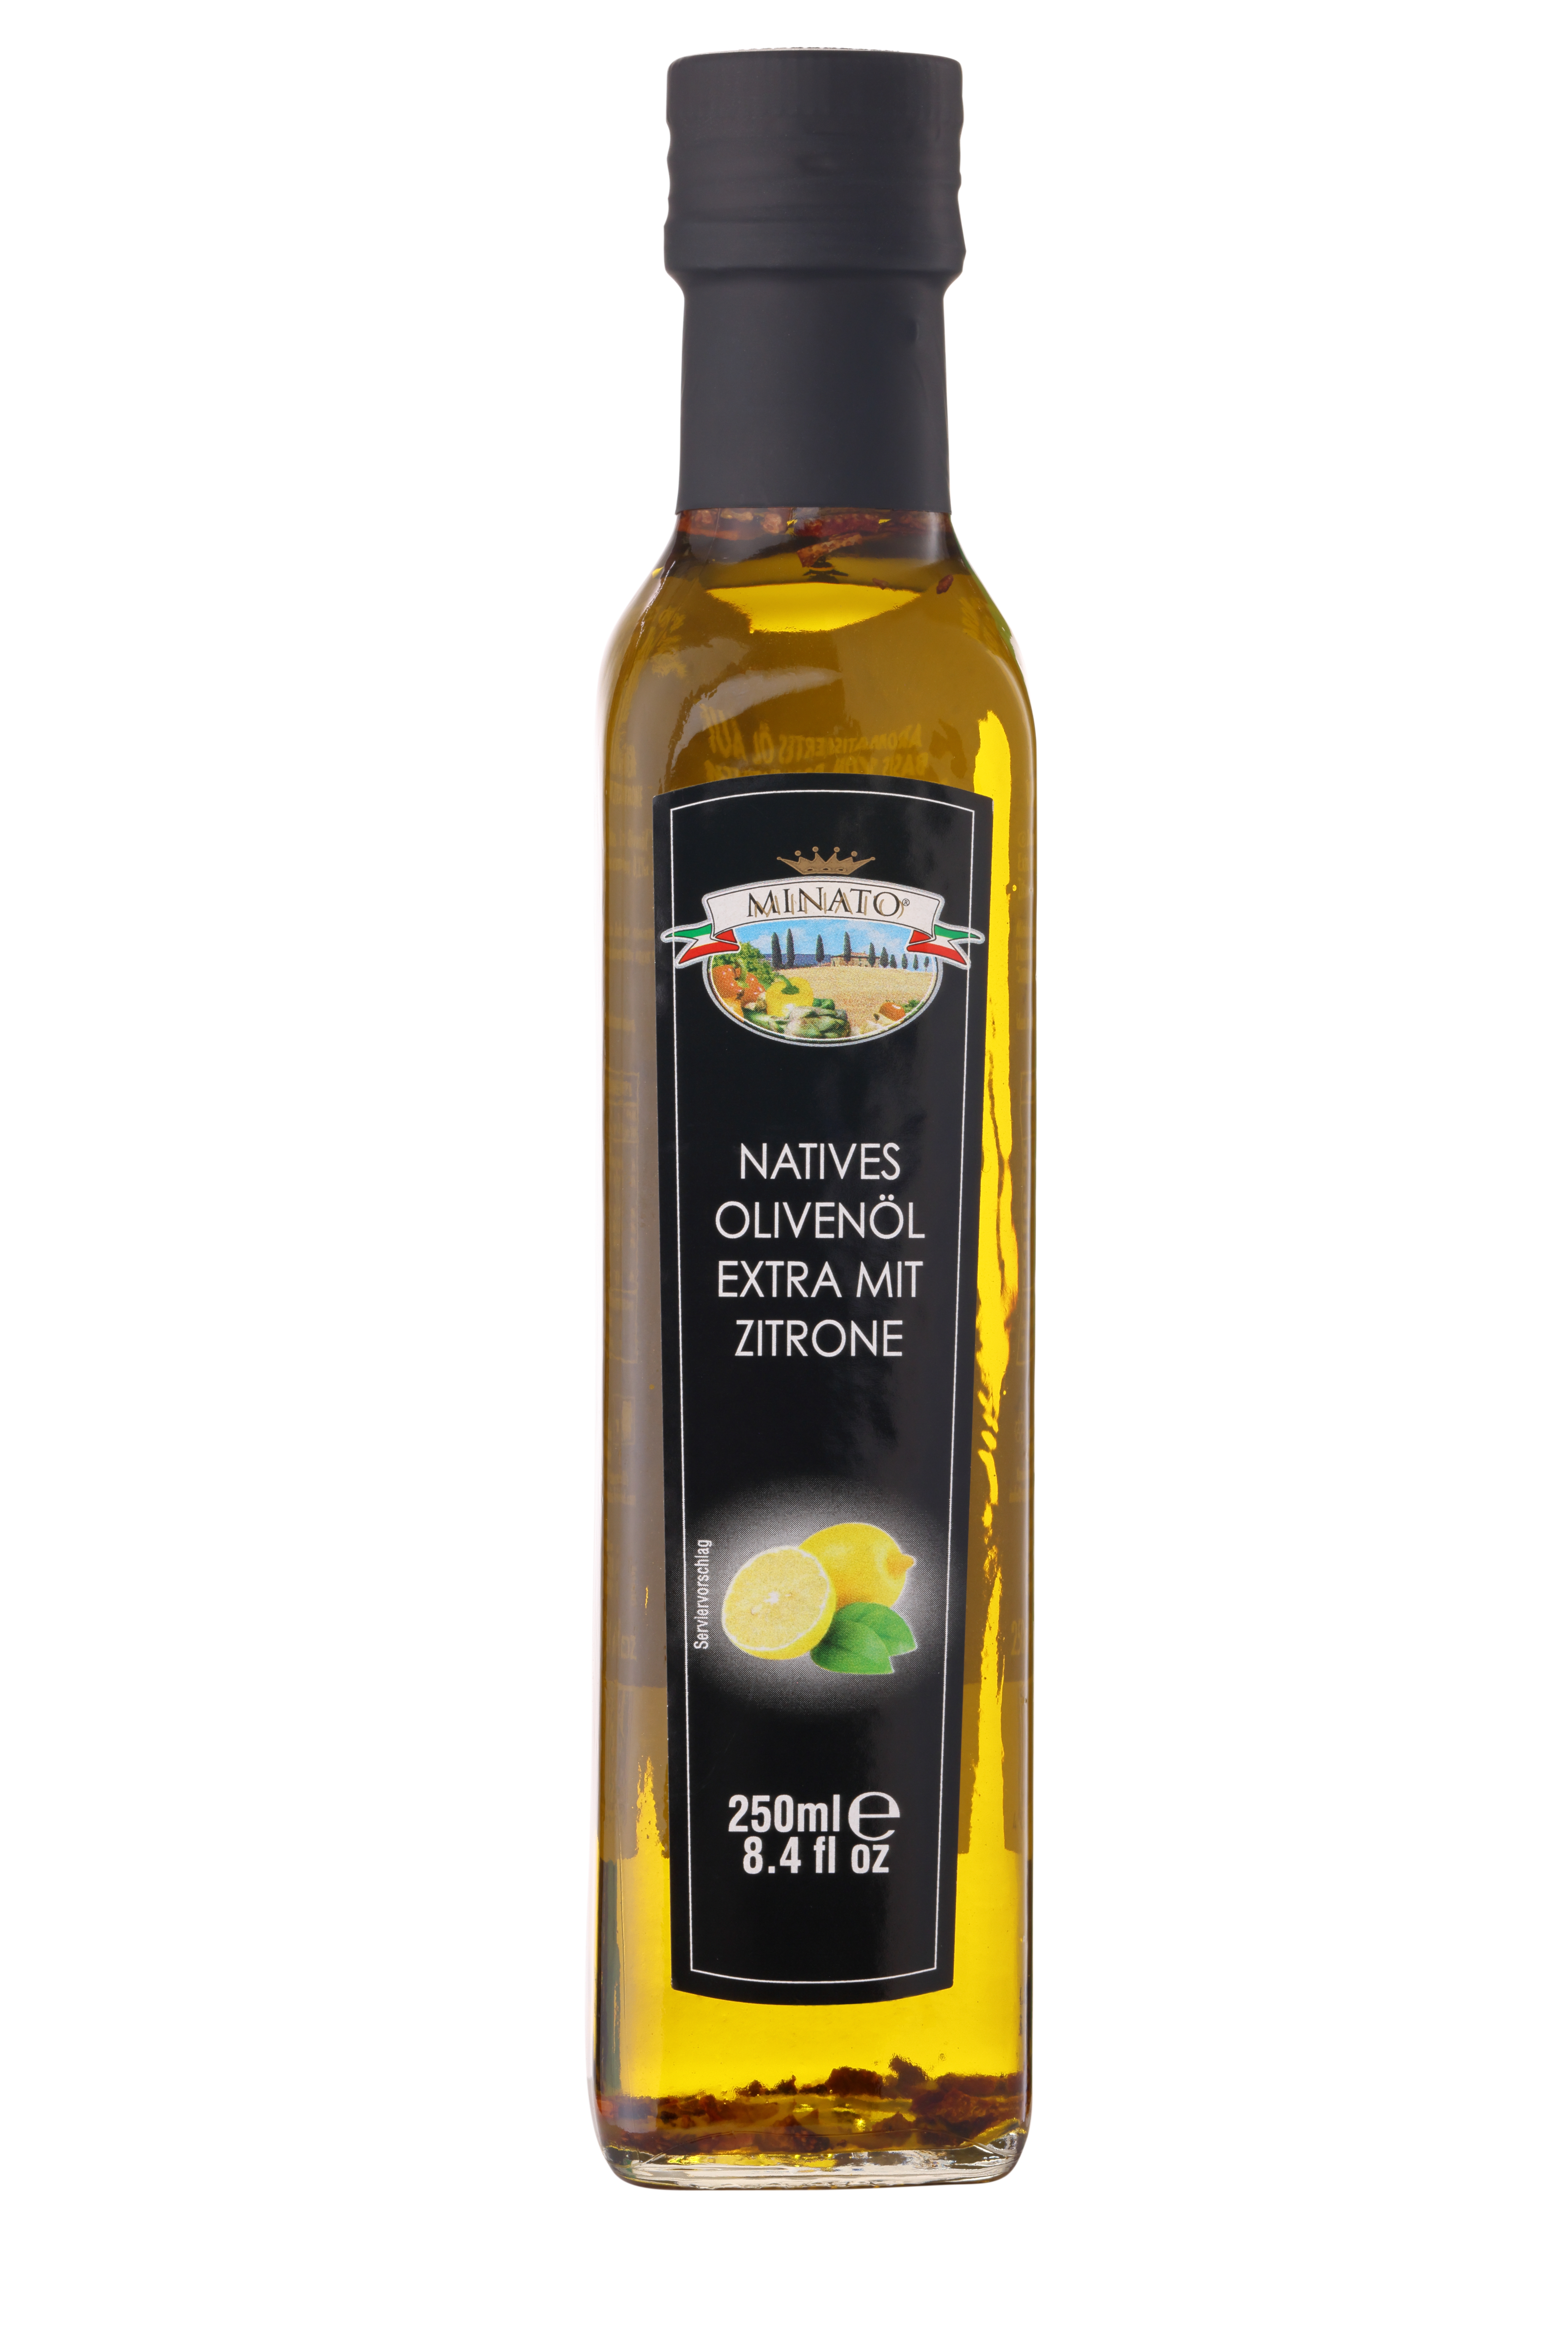 Minato, natives Olivenöl Extra mit Zitrone, 250ml